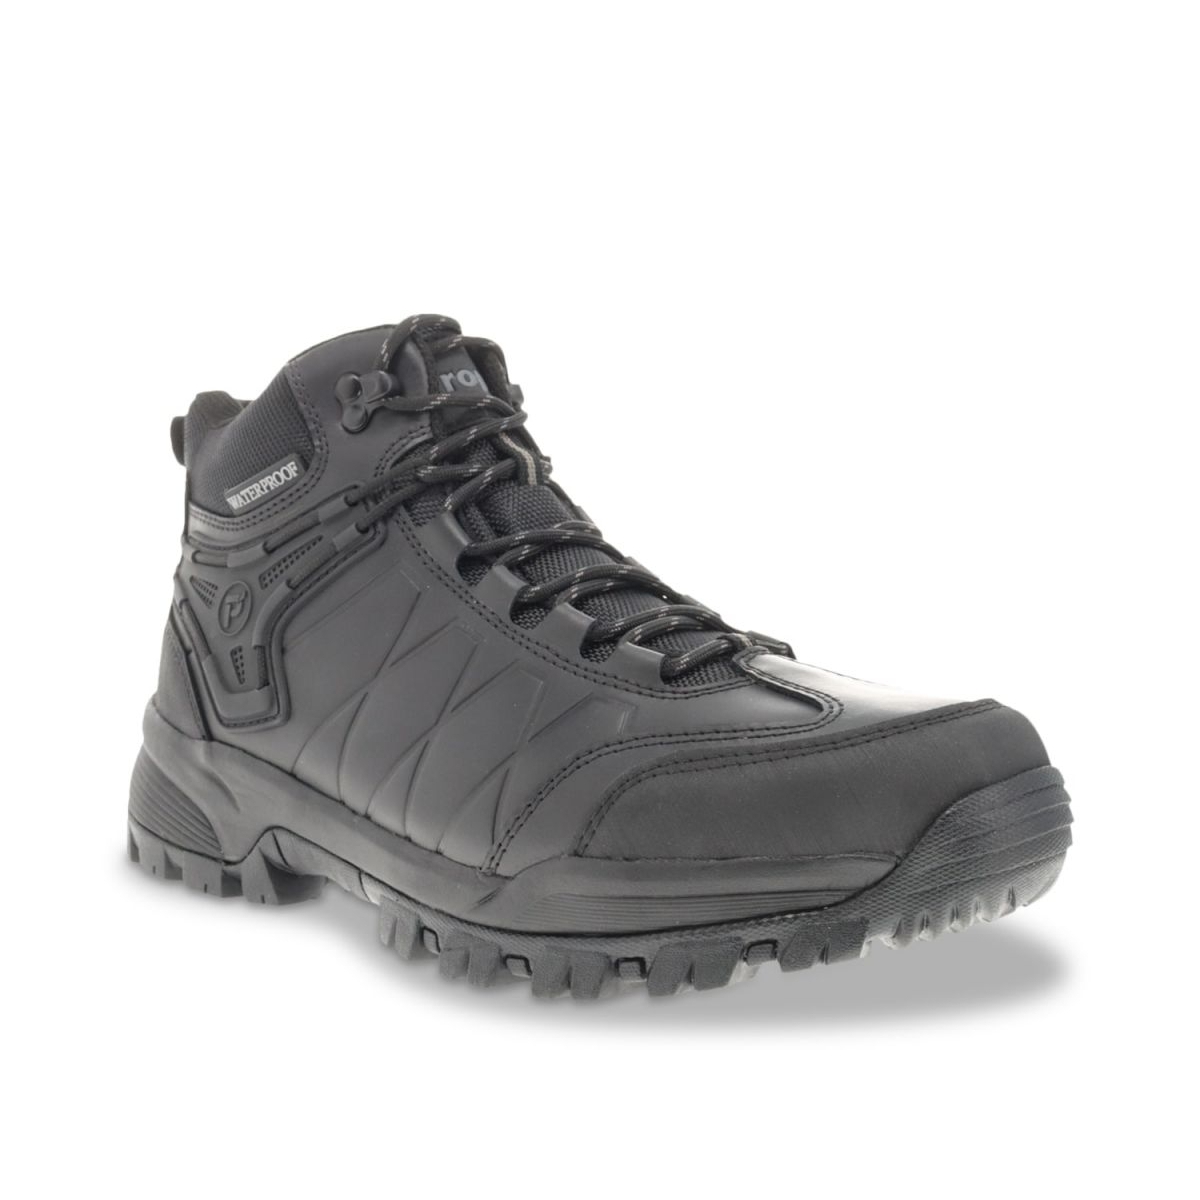 Propet Men's Ridge Walker Force Hiking Boots Black - MBA052LBLK BLACK - BLACK, 11 WIDE